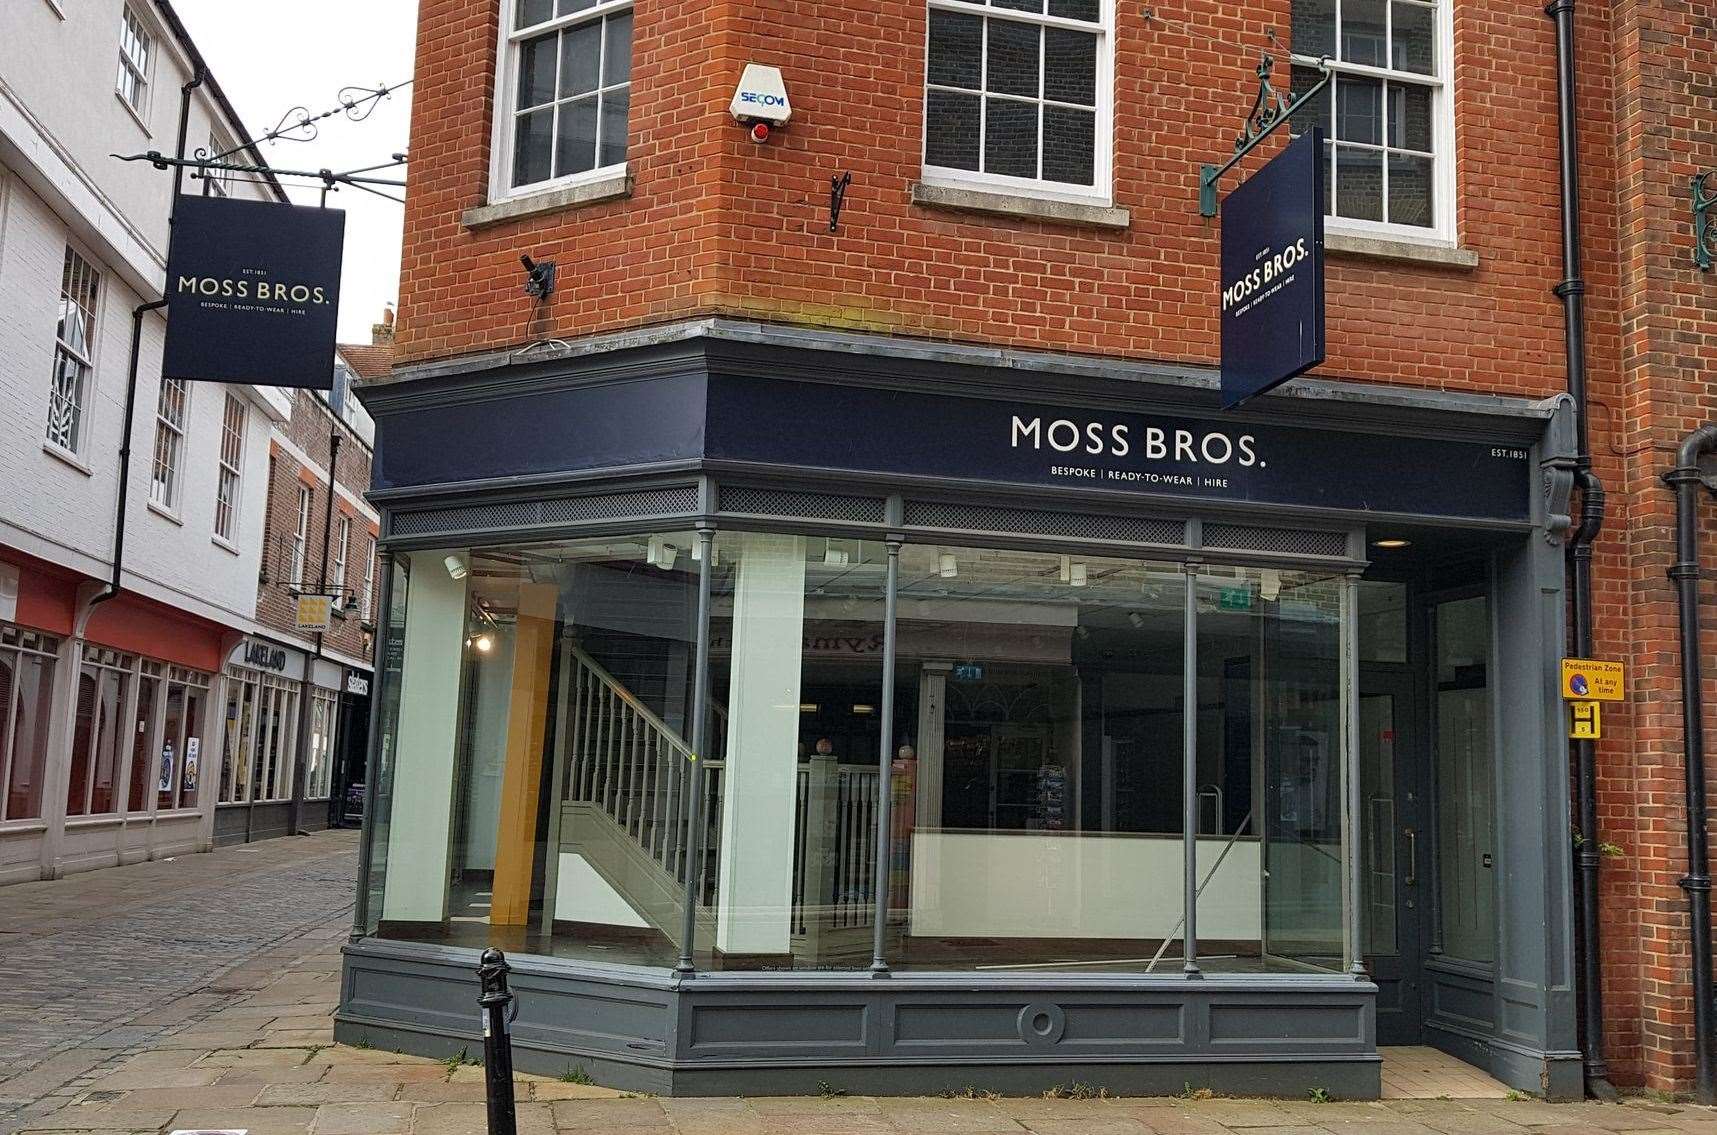 Moss Bros in Longmarket has closed down